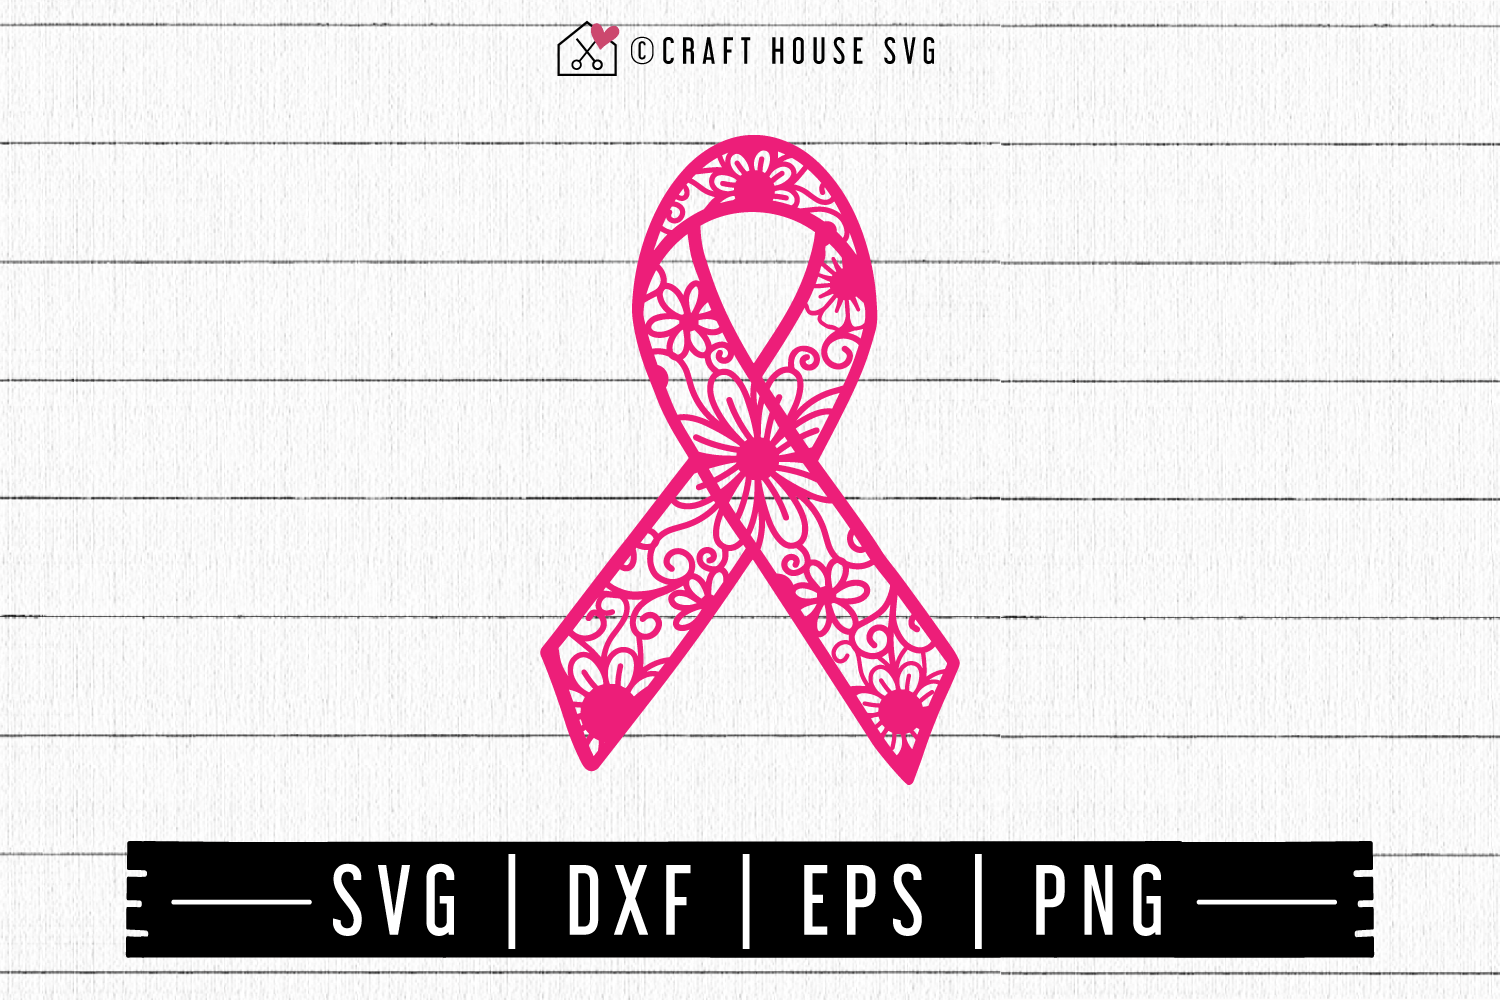 FREE Awareness ribbon mandala SVG | FB111 Craft House SVG - SVG files for Cricut and Silhouette